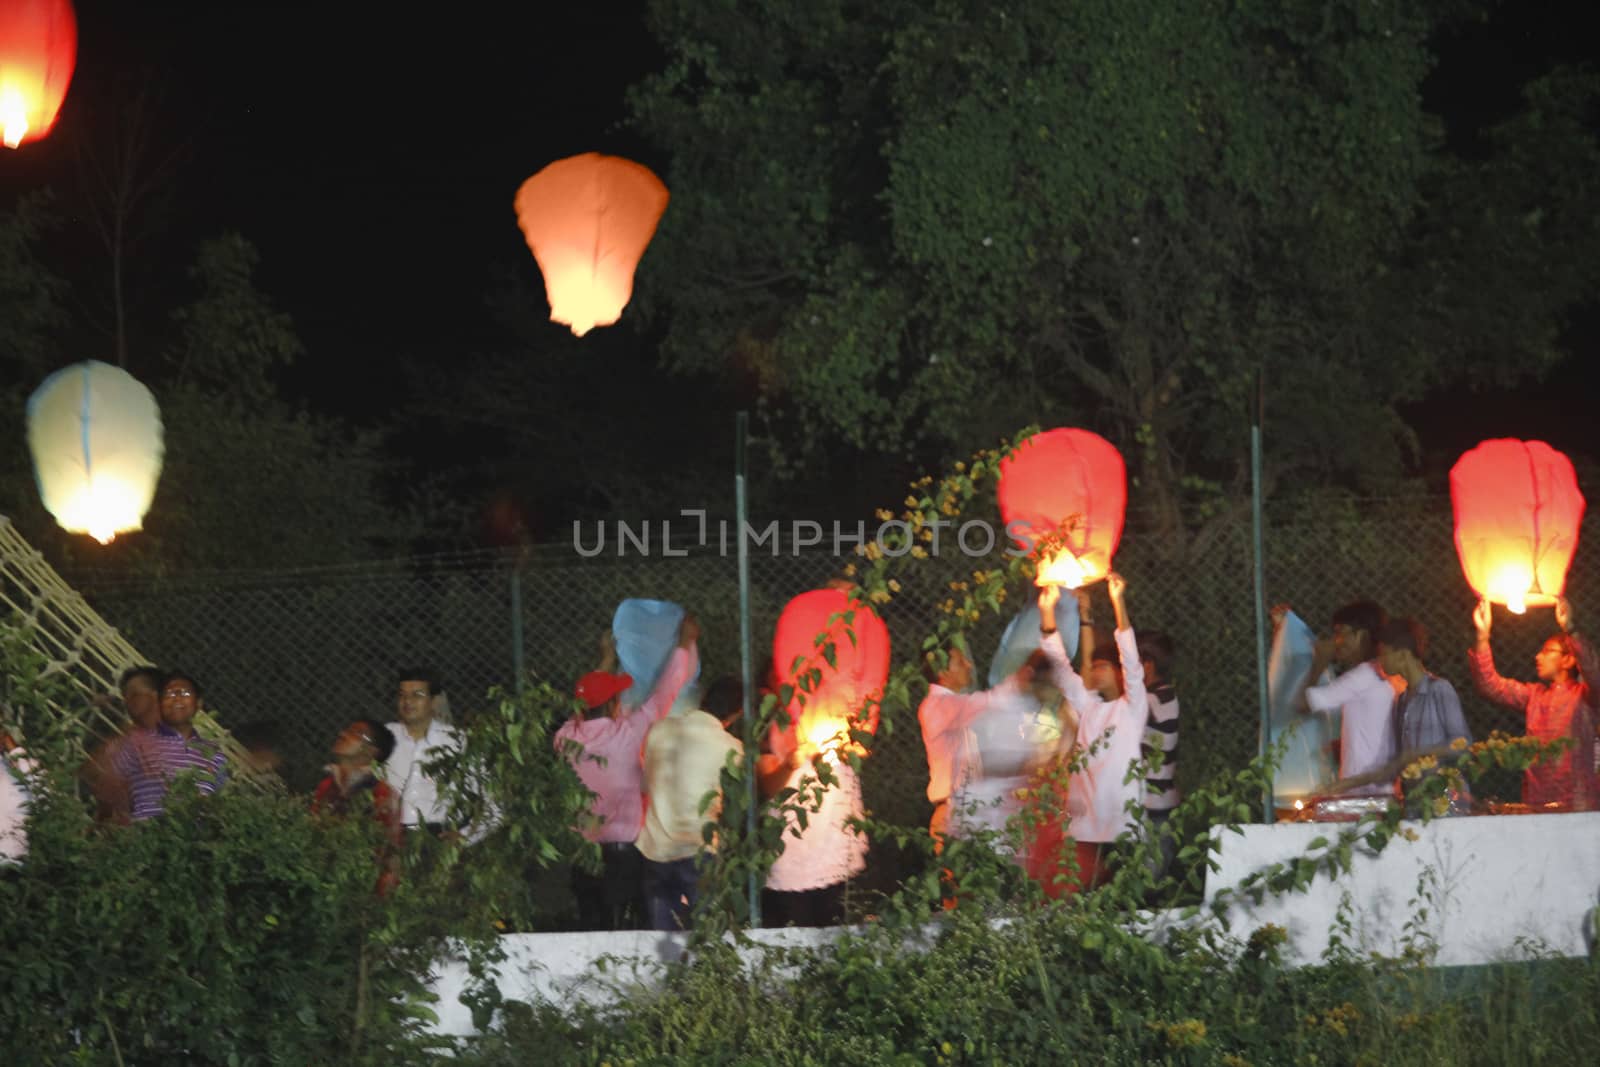 kongming lantern (sky lantern) by yands